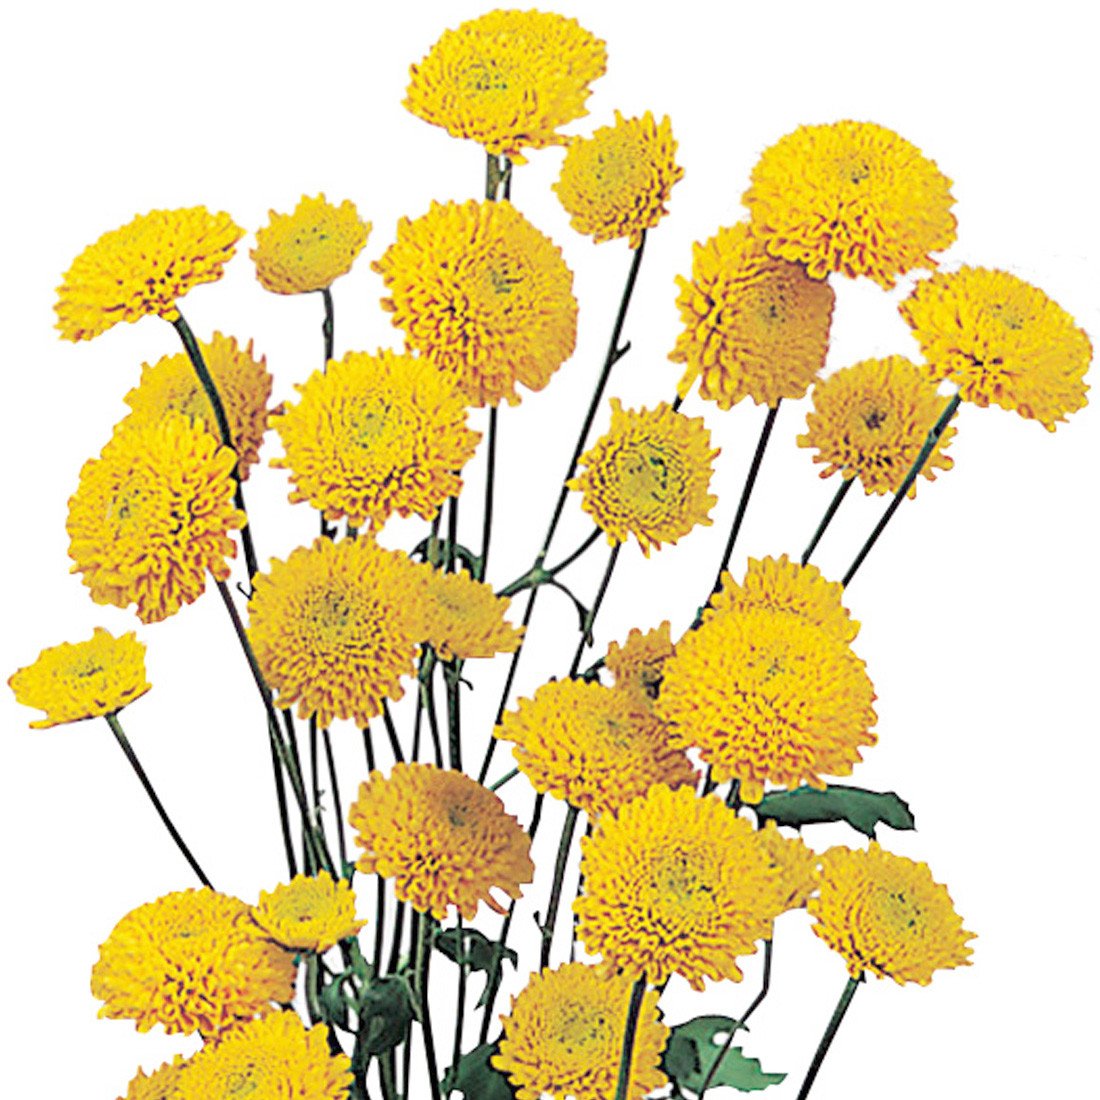 Yellow Daisy Pom Poms Flowers for Sale